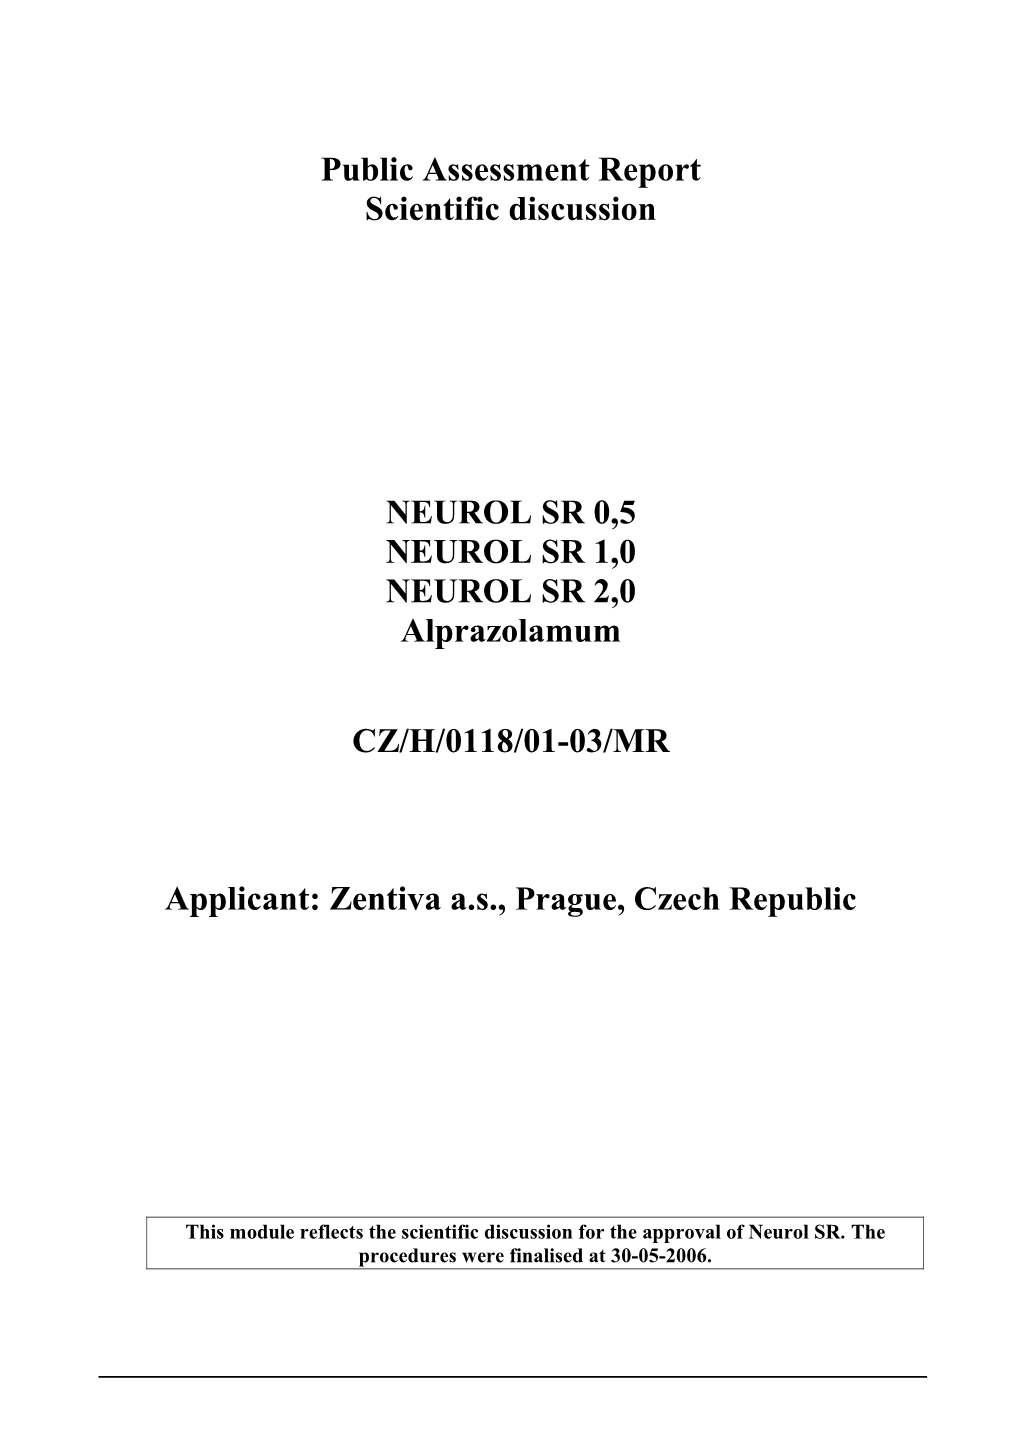 Applicant: Zentiva A.S., Prague, Czech Republic